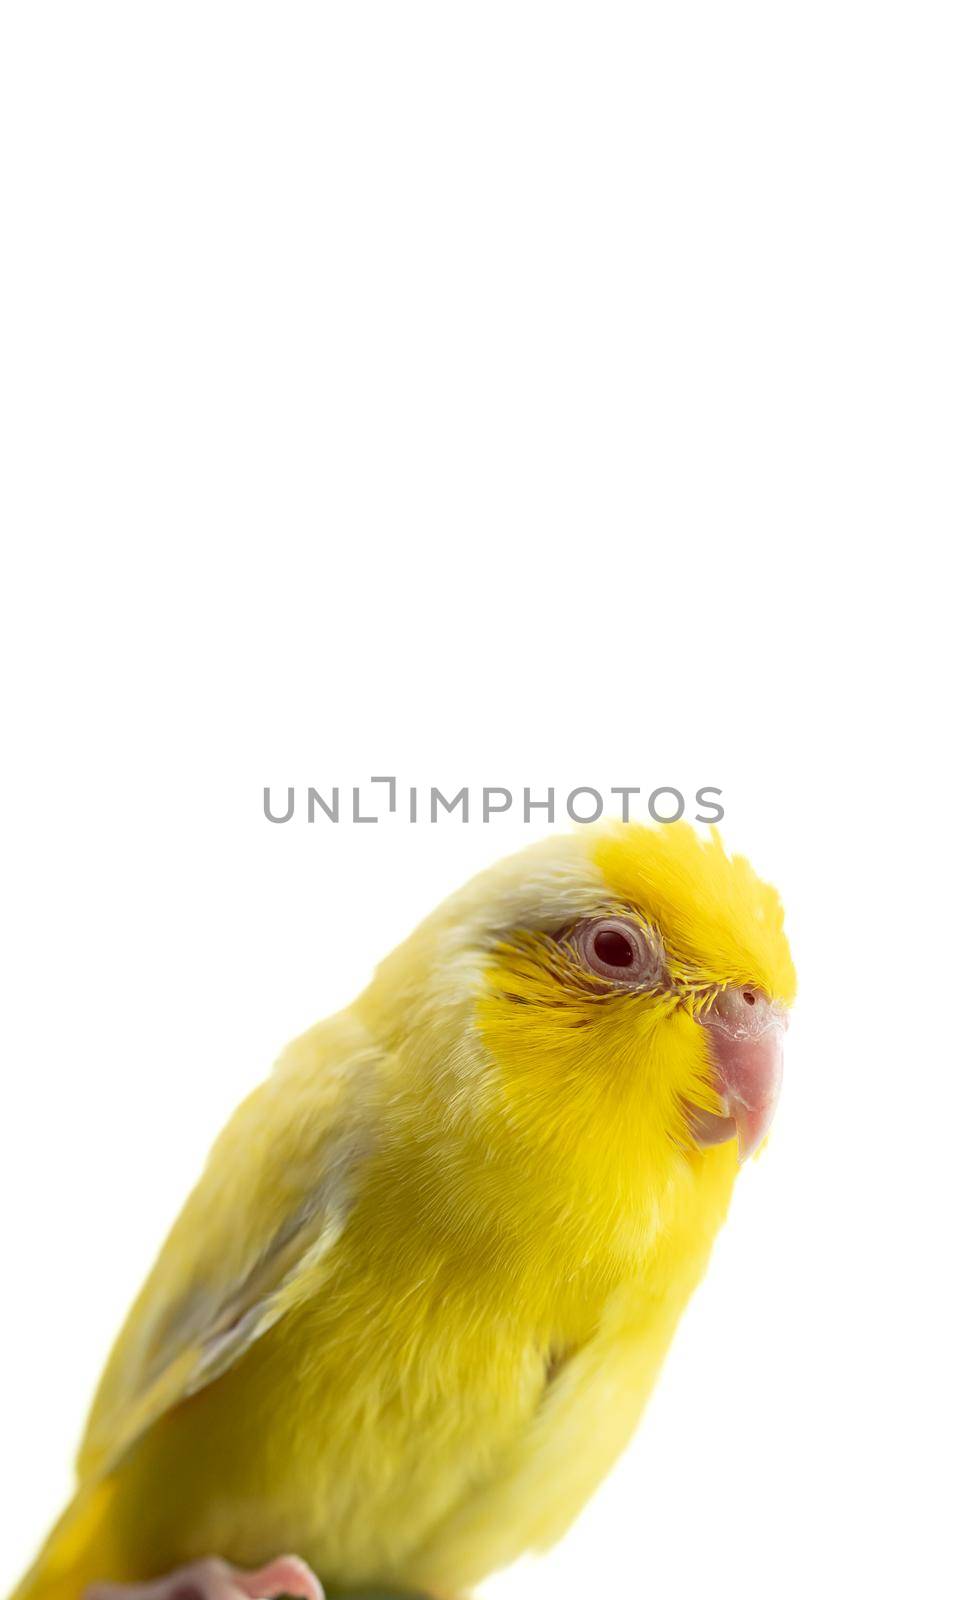 Tiny yellow parrot parakeet Forpus bird, white isolation background. by sirawit99